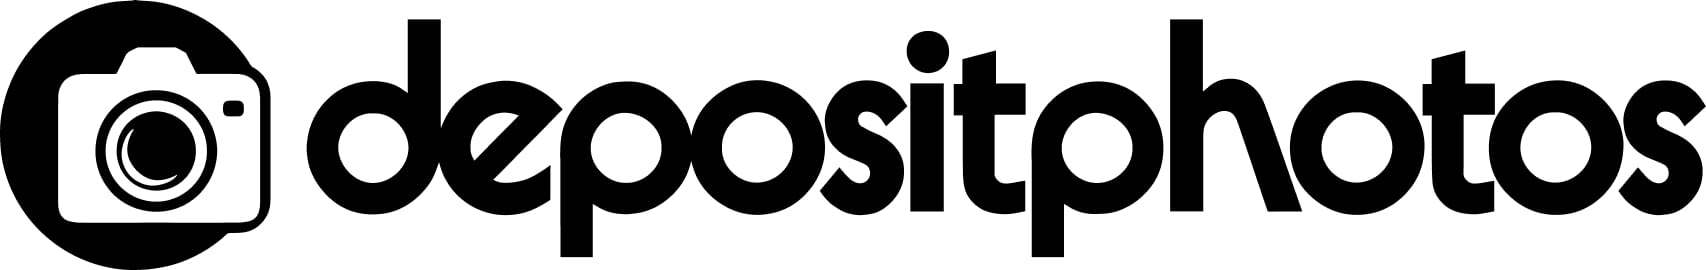 Logo Deposithotos